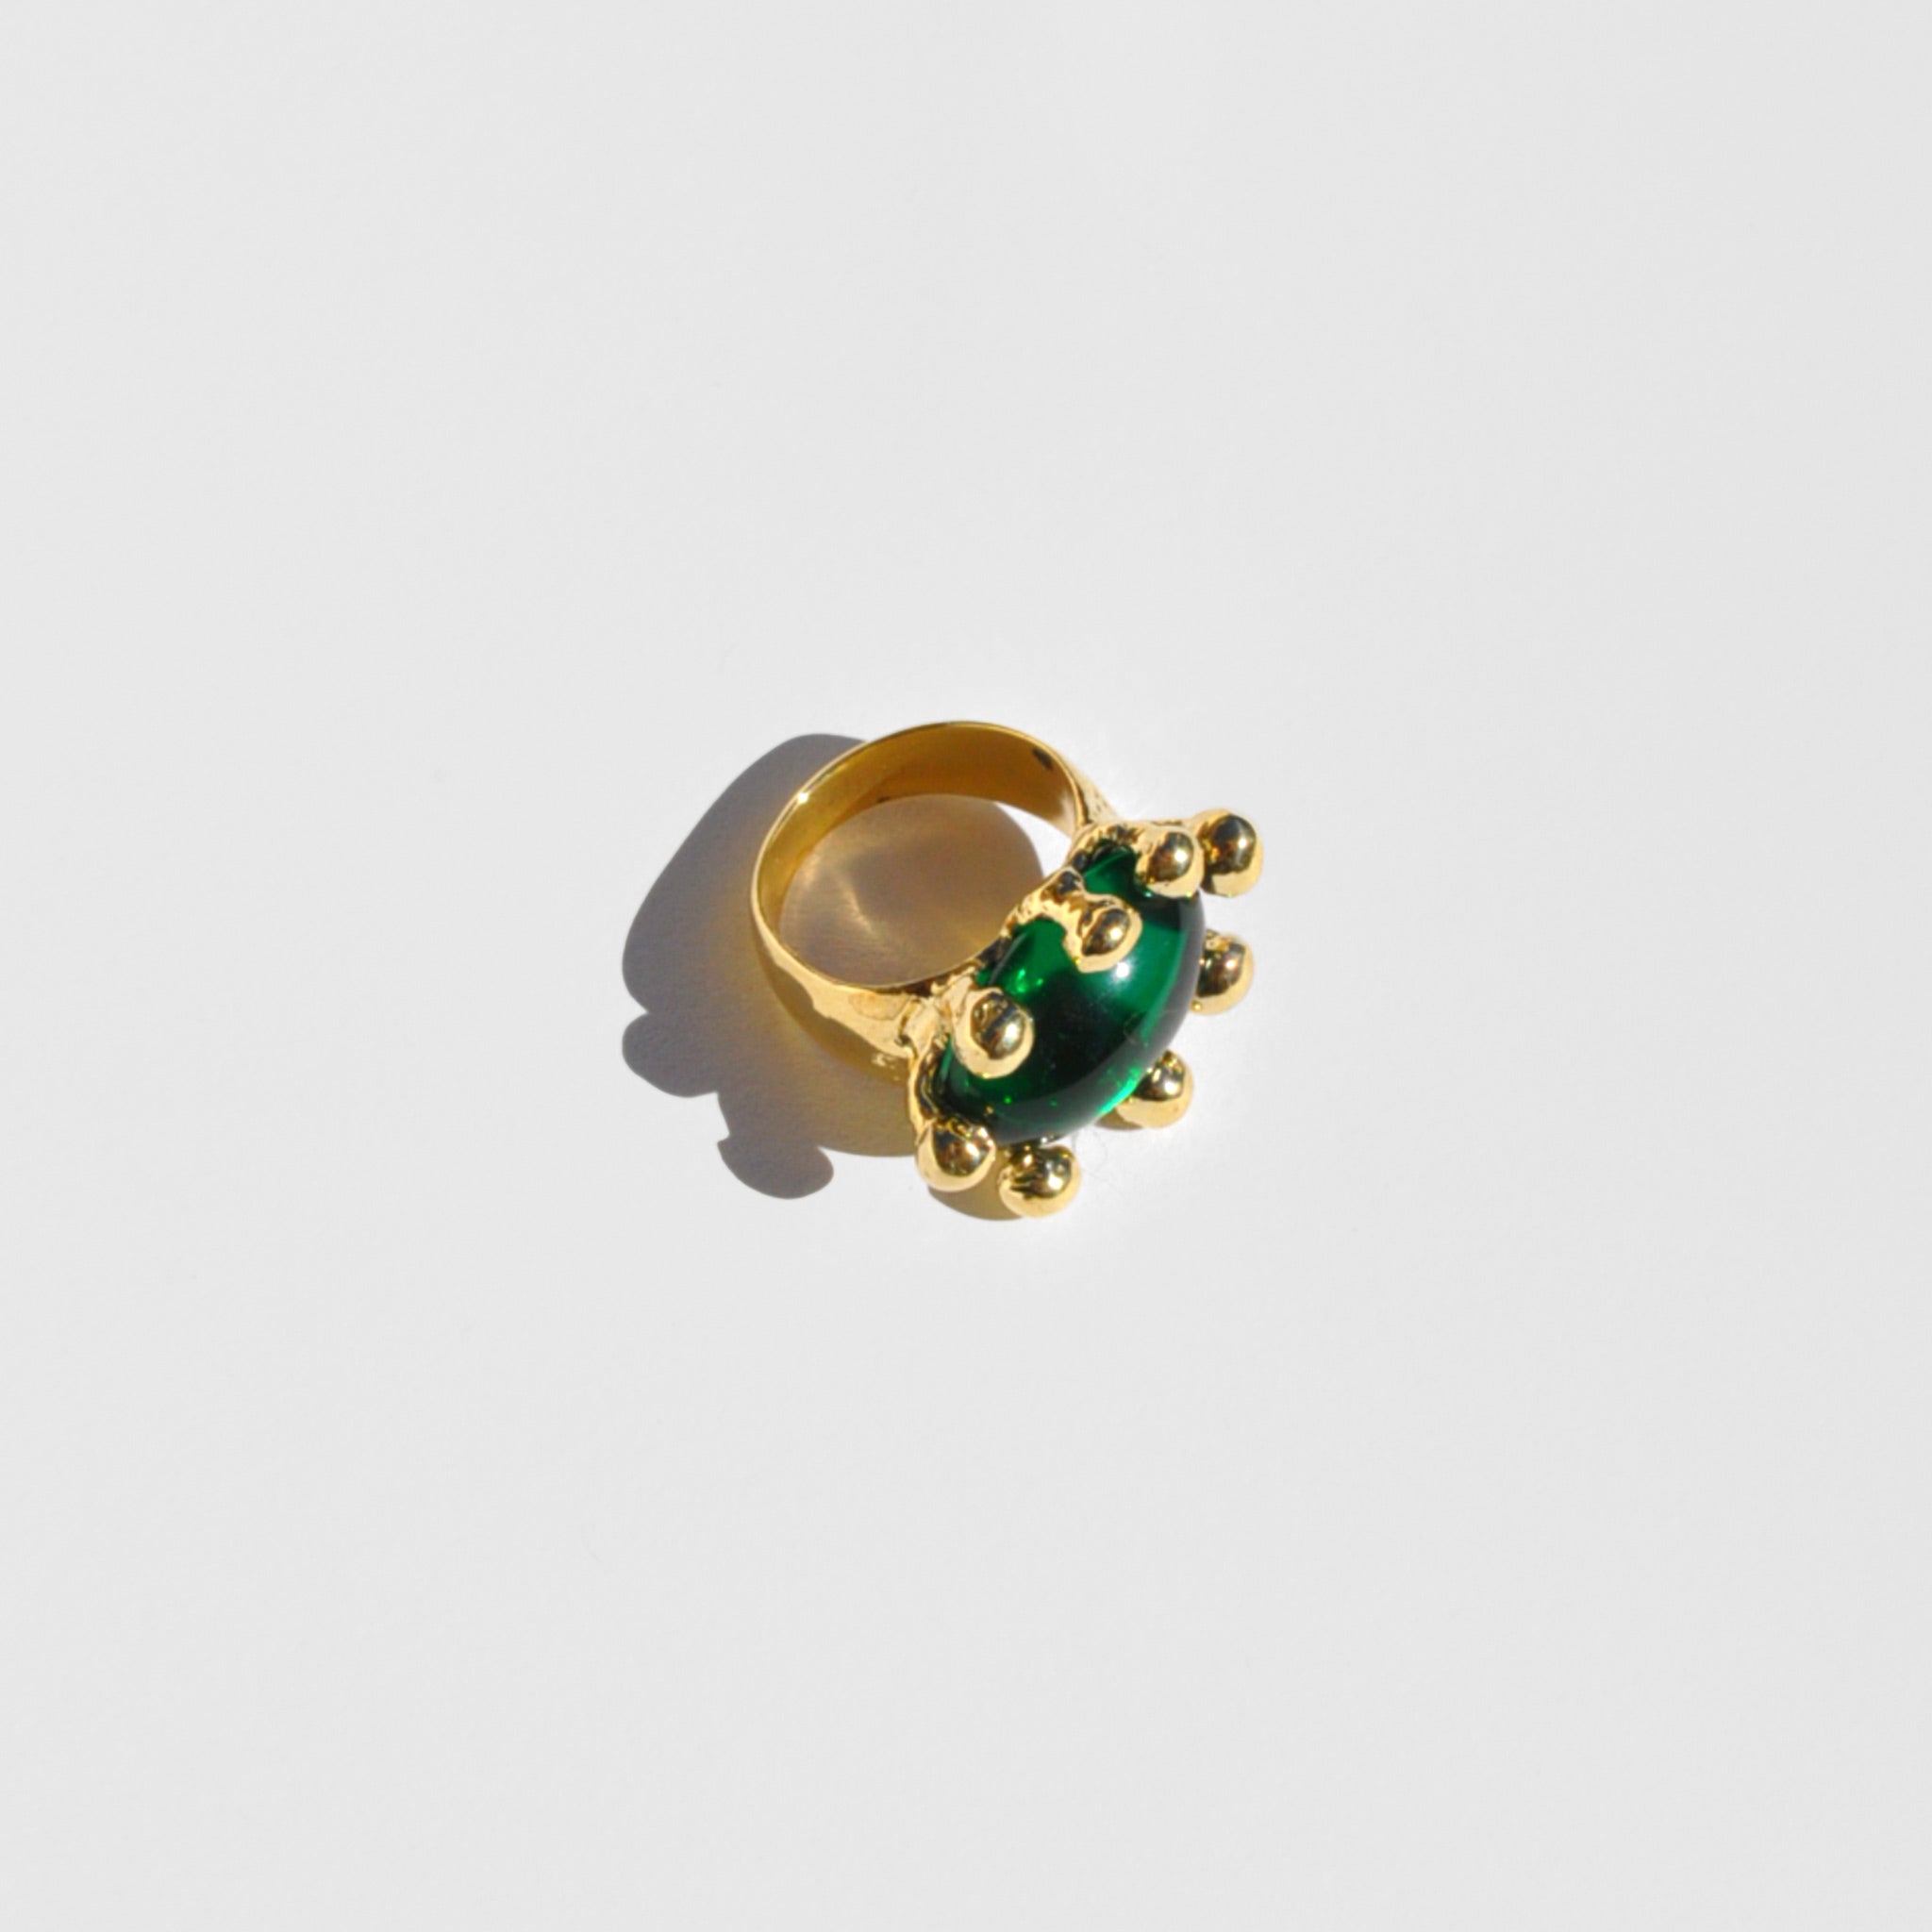 Side image of the diva ring in emerald by Mondo Mondo.